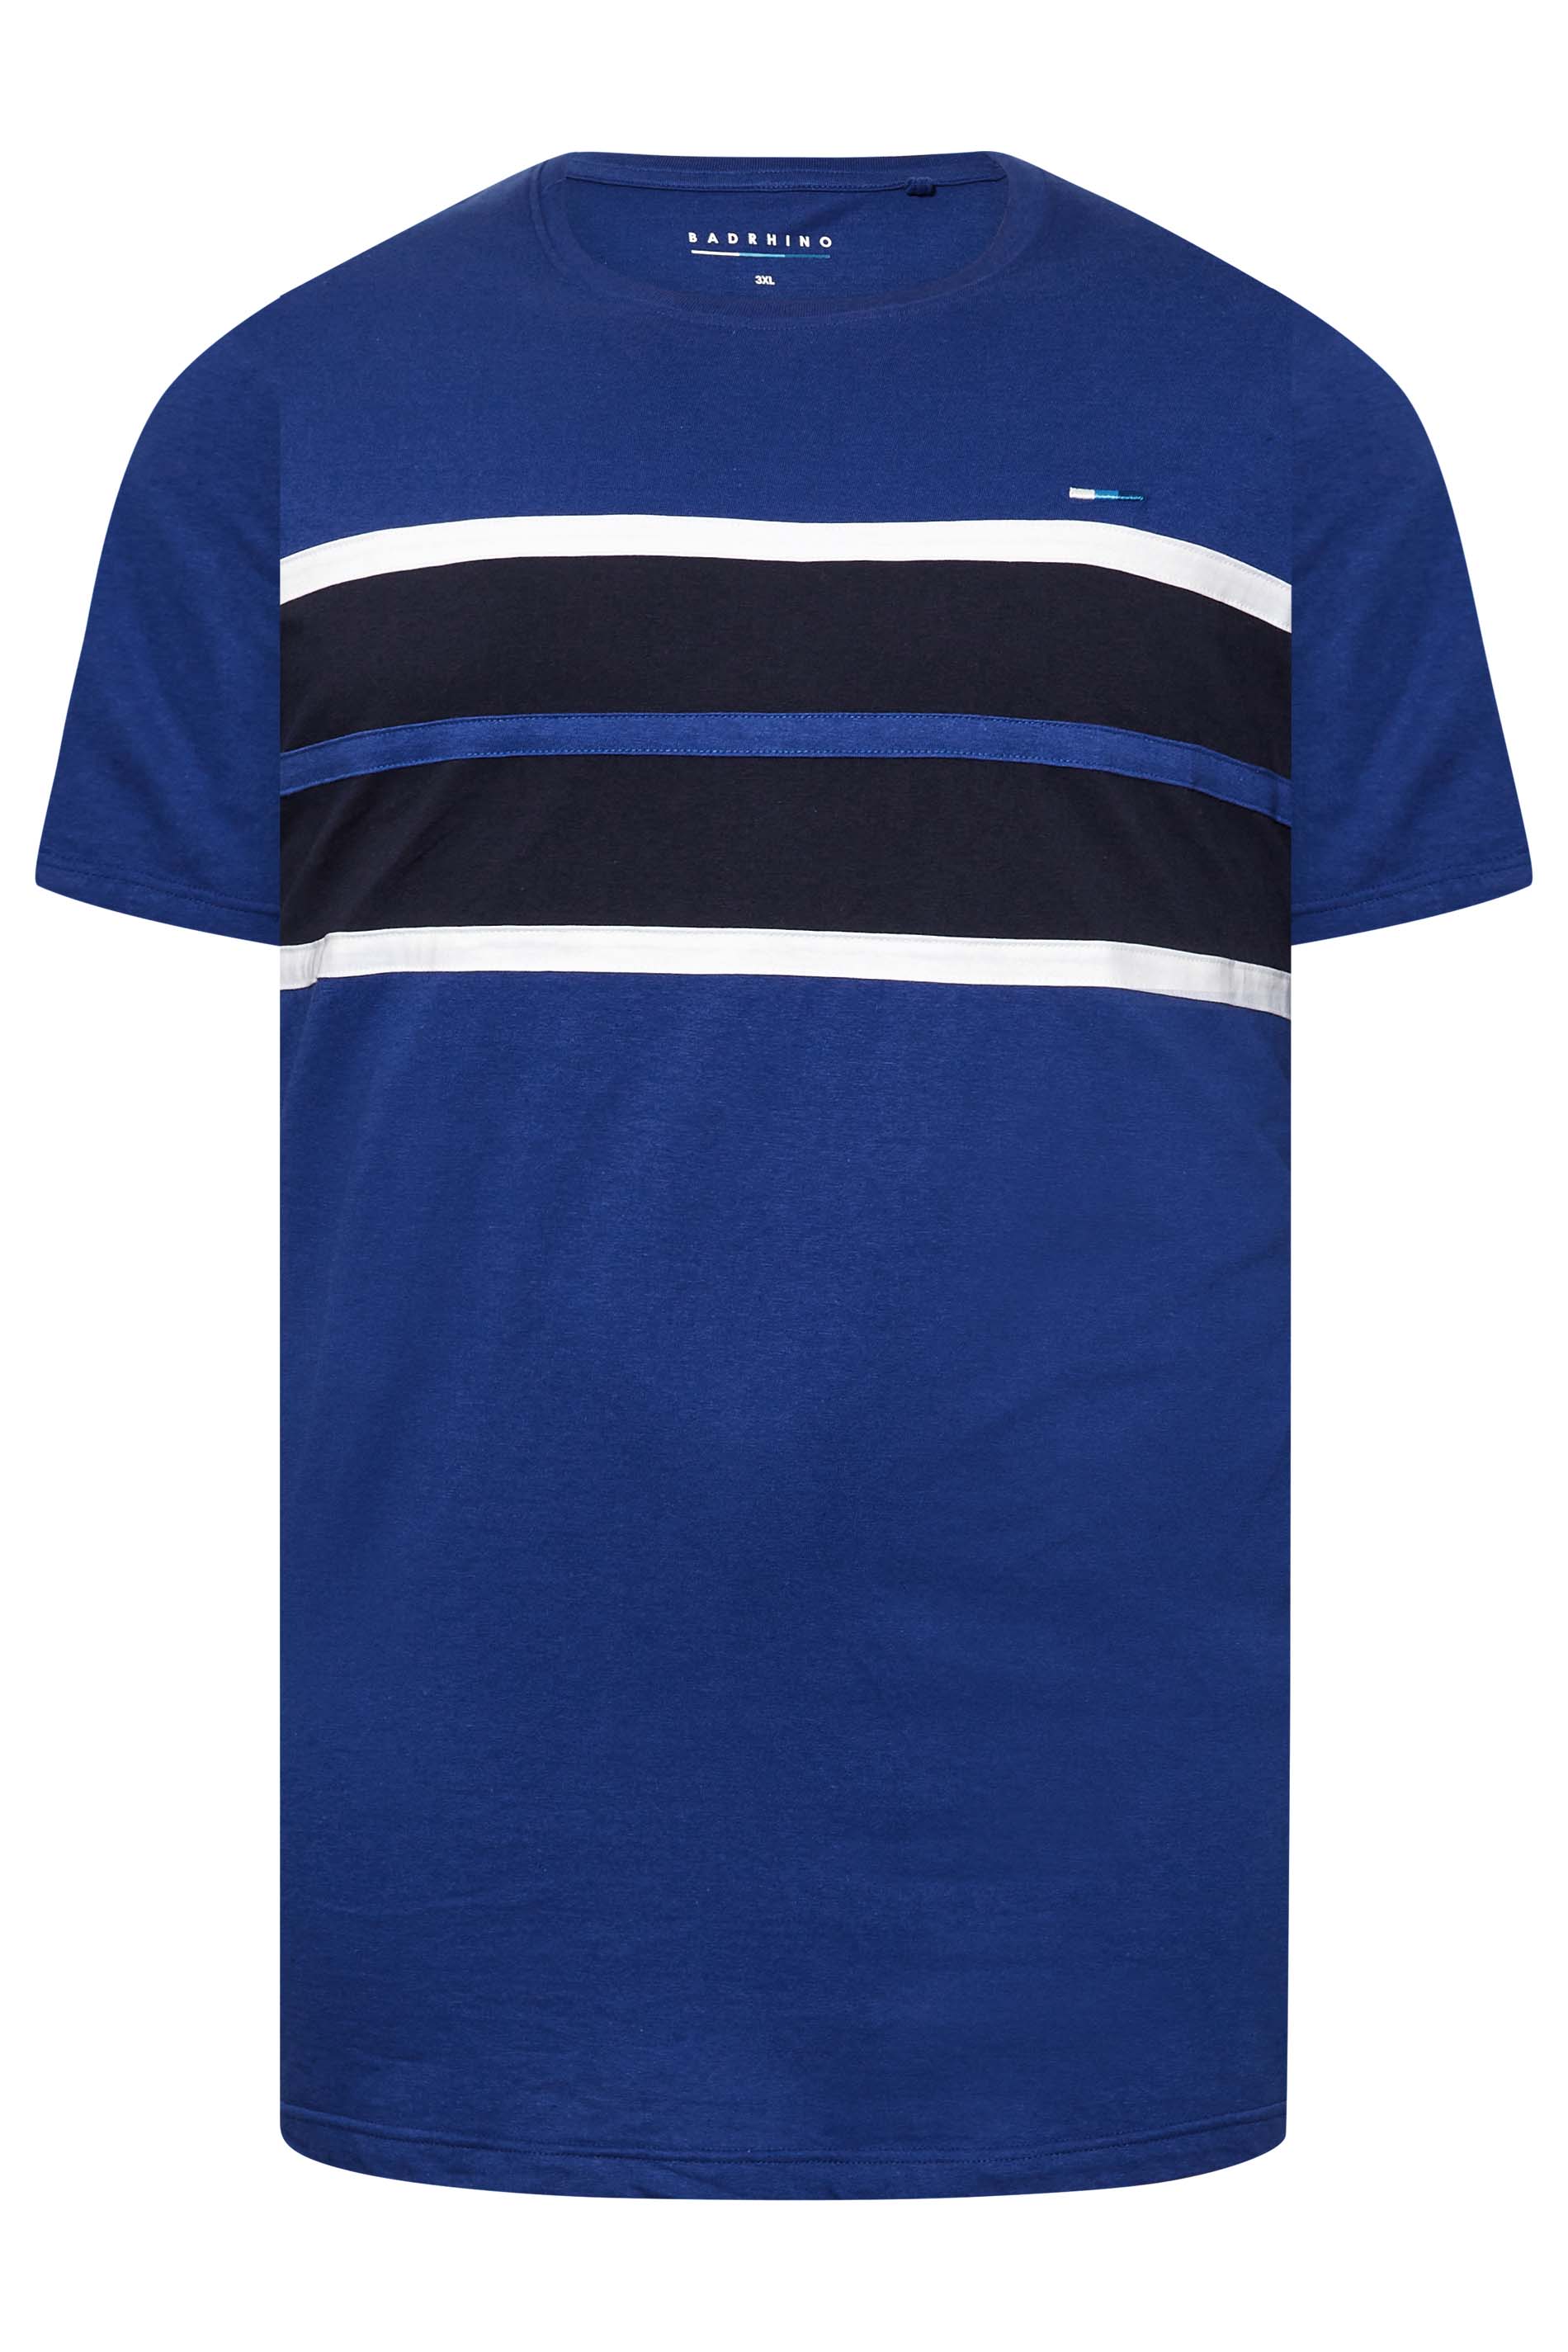 BadRhino Big & Tall Blue Colour Block Stripe T-Shirt | BadRhino 3